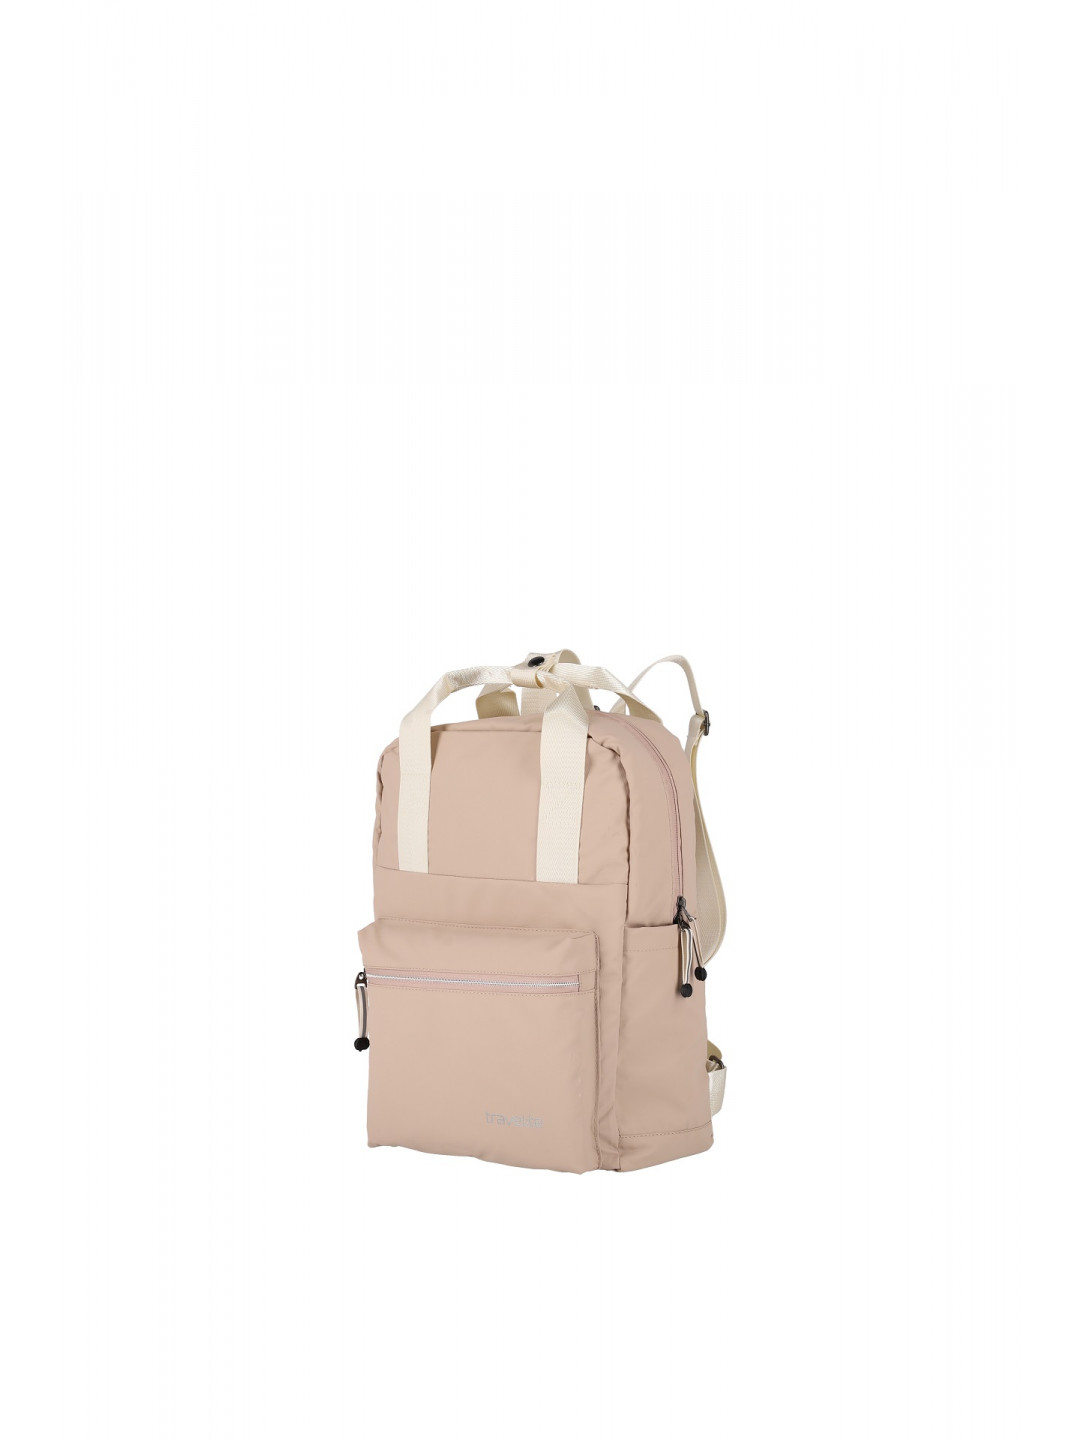 Travelite Basics Canvas Backpack Light brown